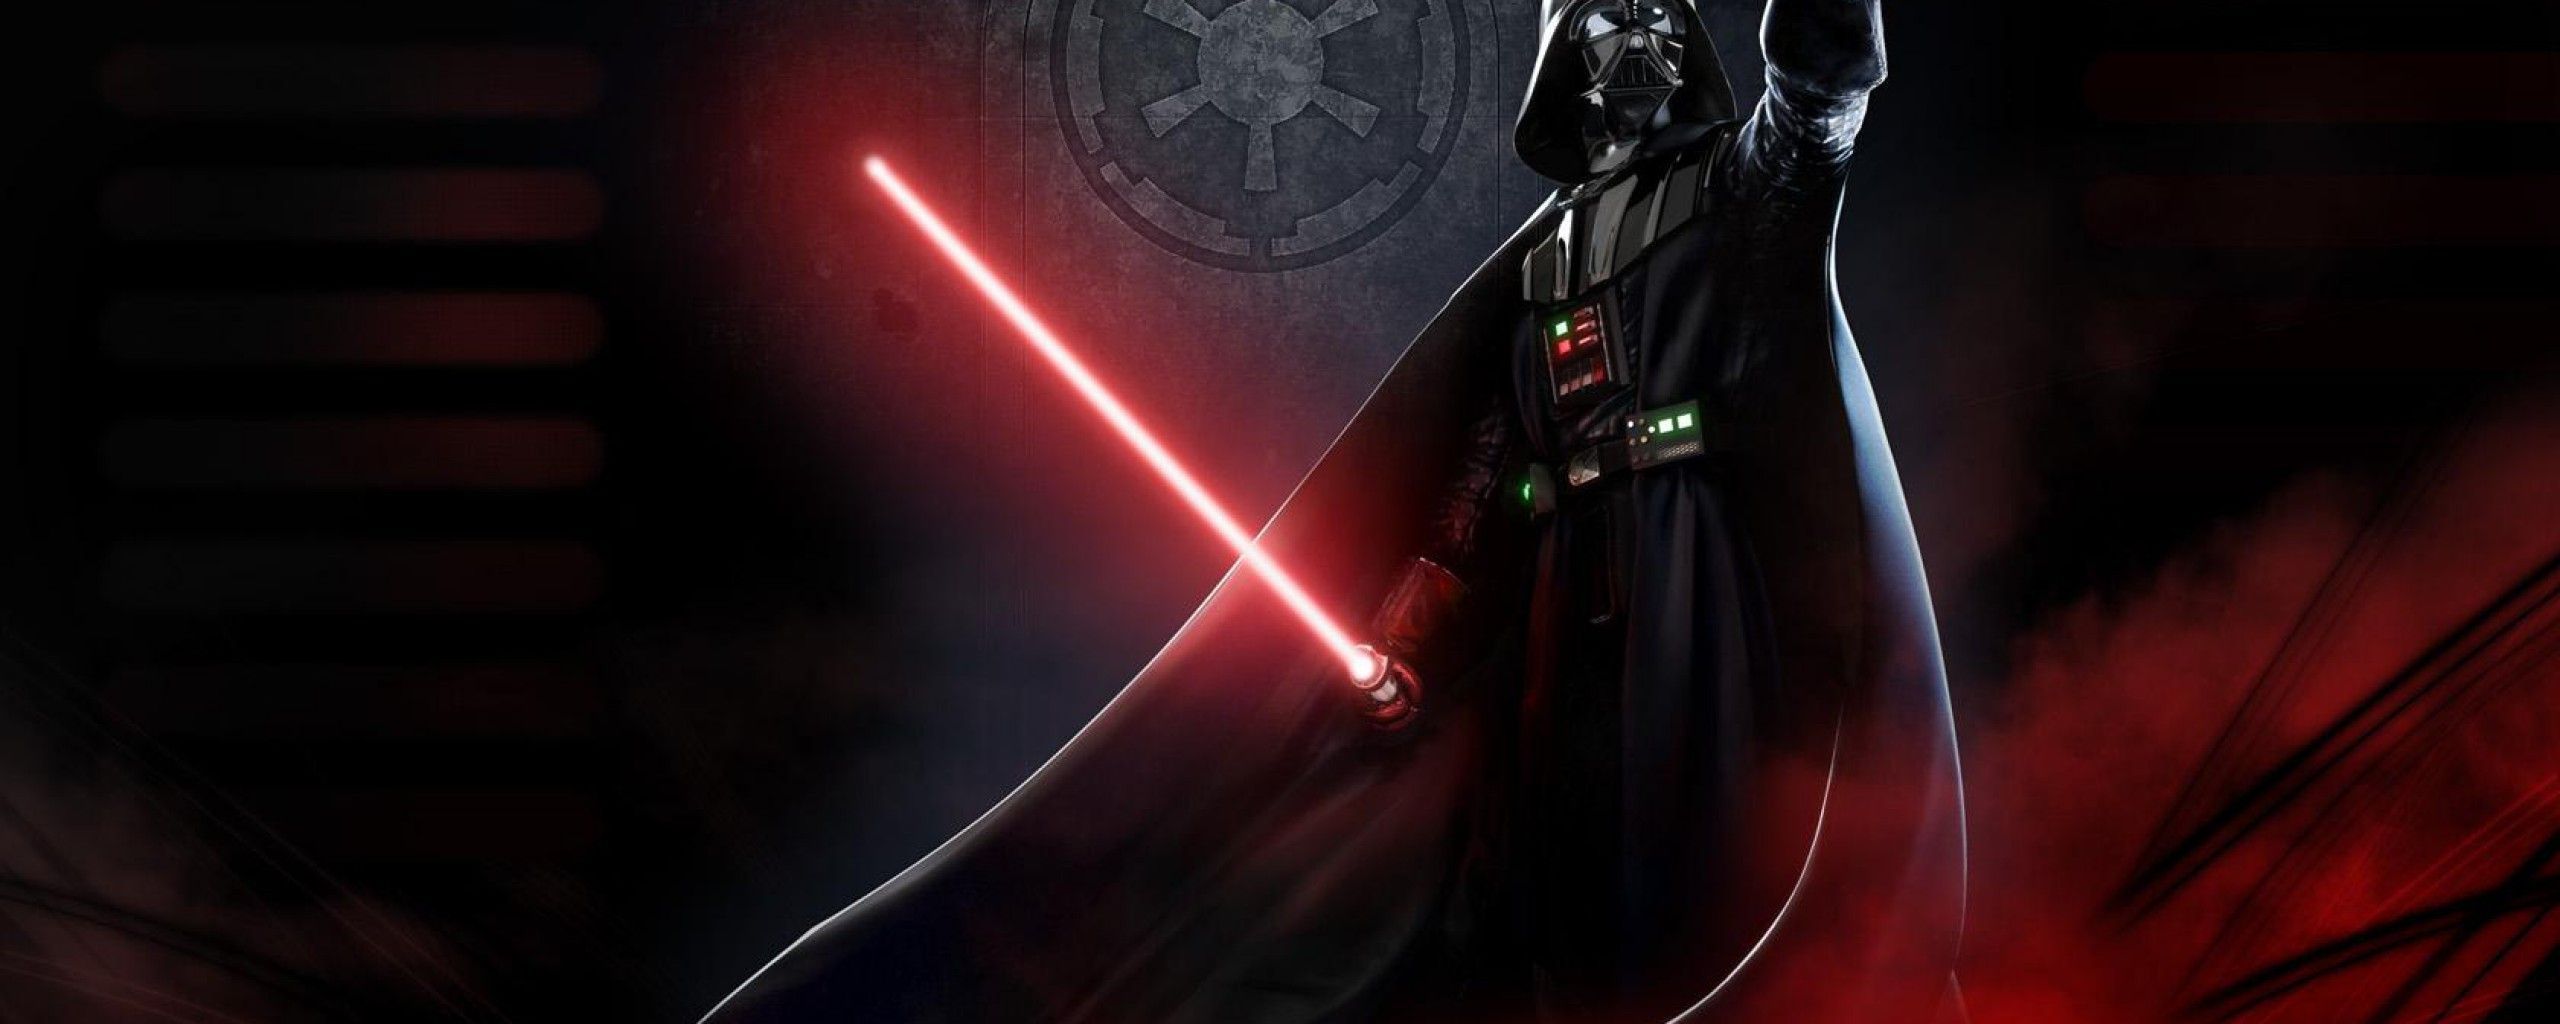 Star Wars Darth Vader Red | HD Wallpapers